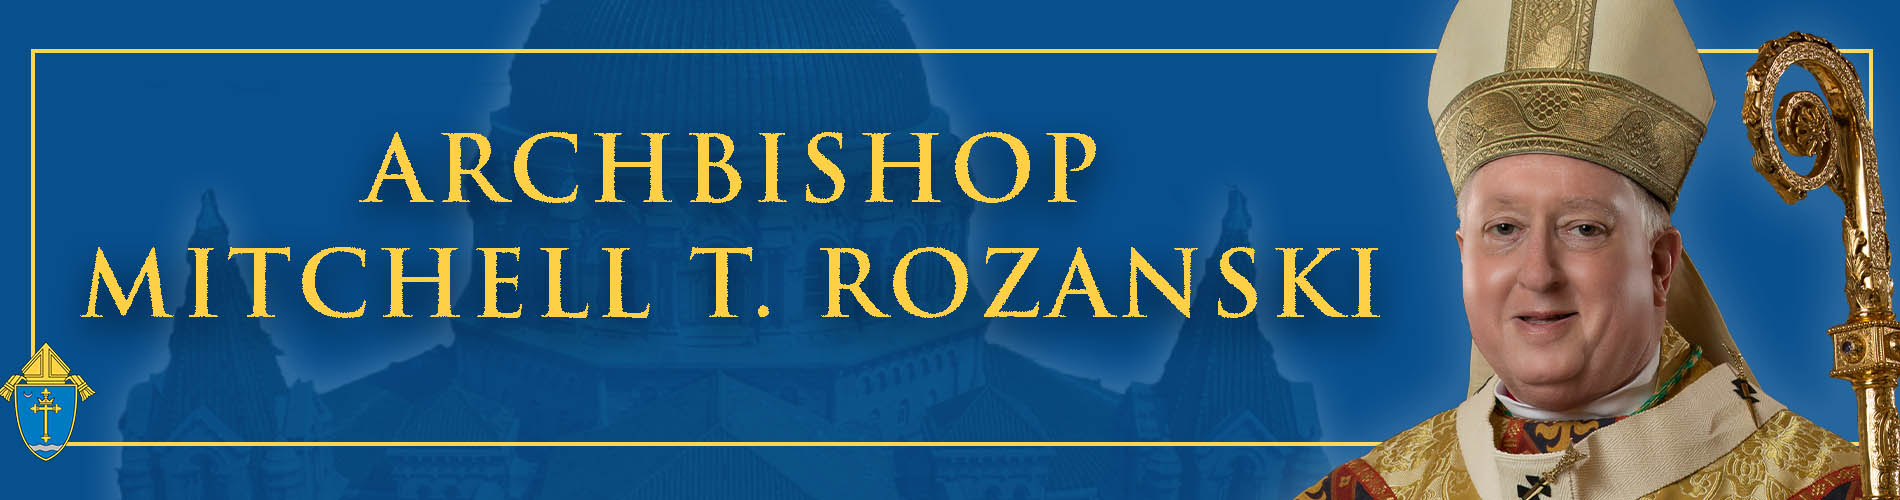 rozanski website header resized